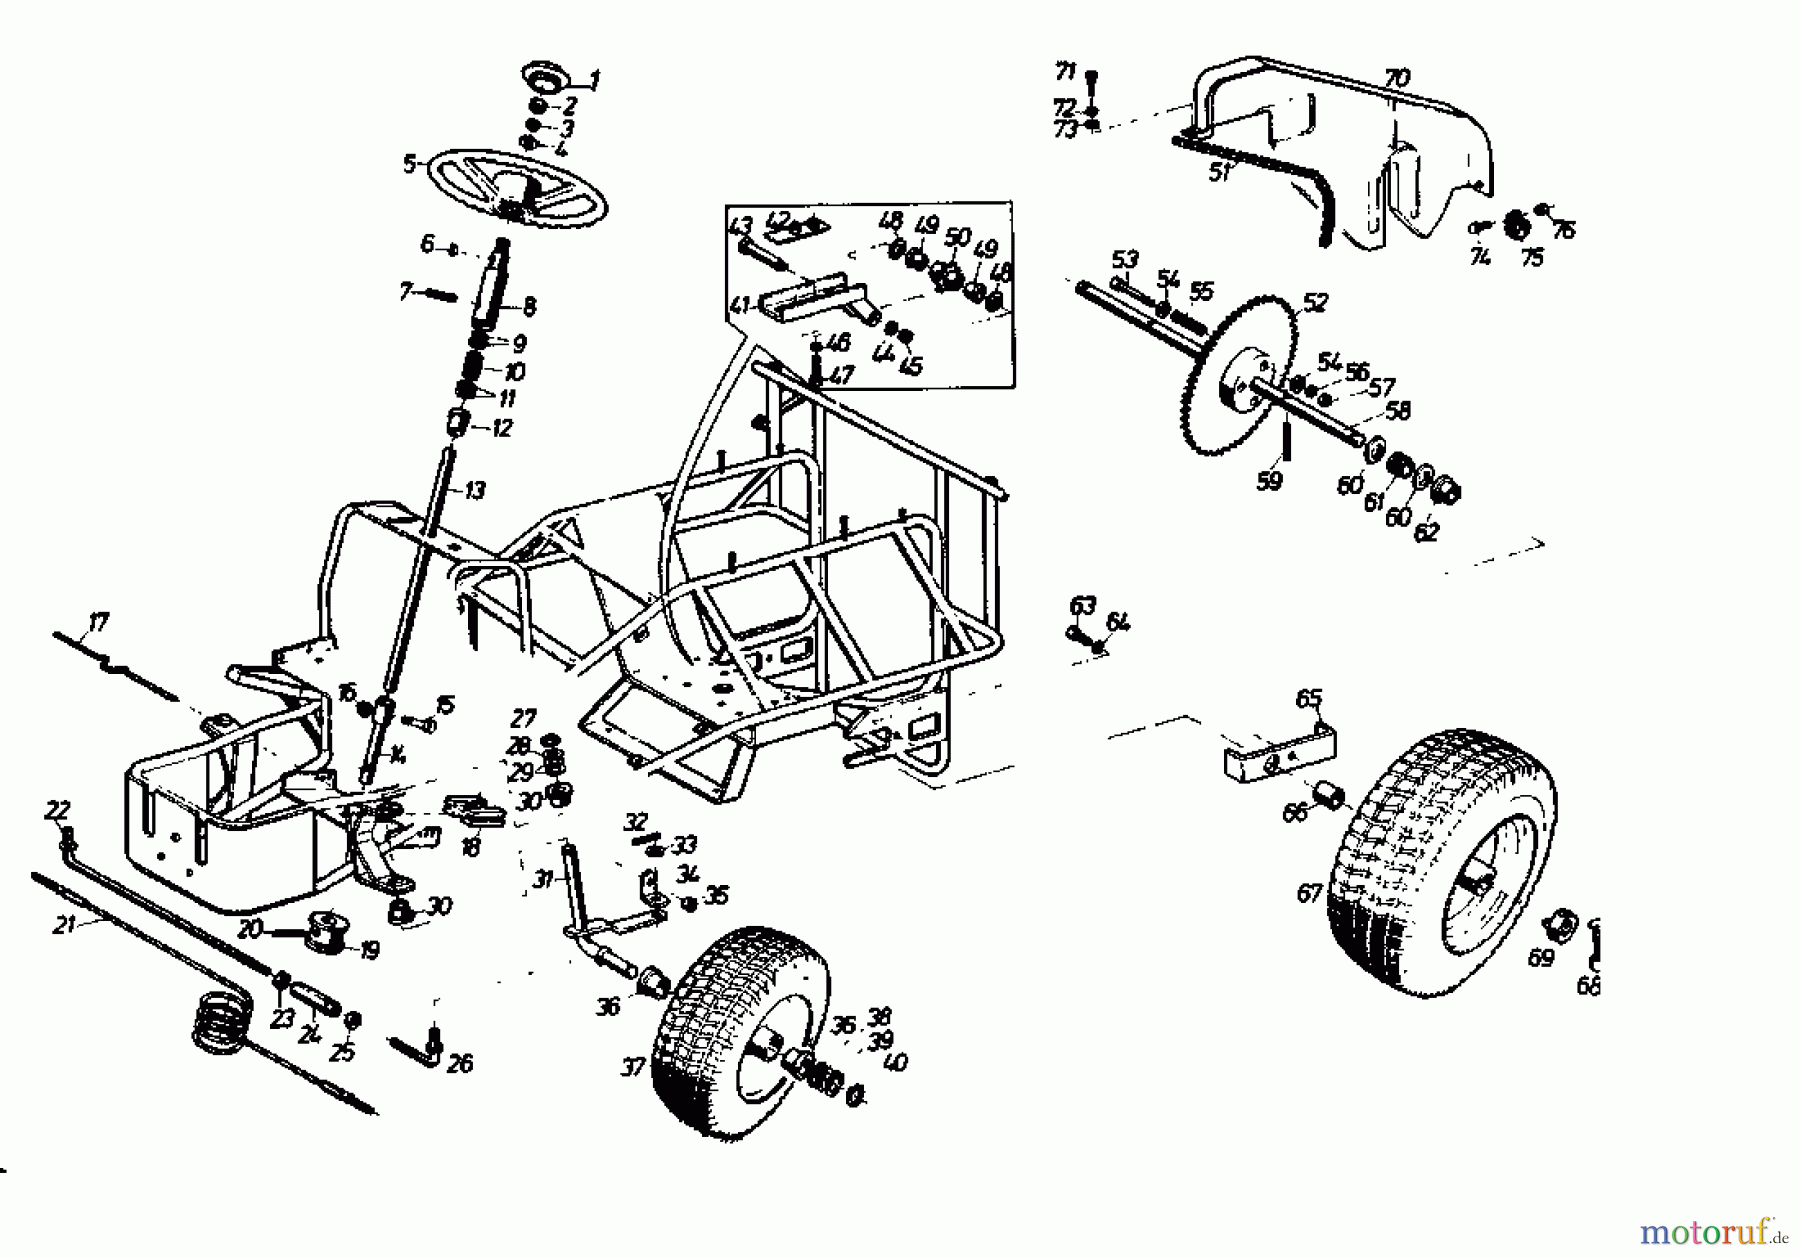  Gutbrod Lawn tractors Sprint 1000 E 02840.04  (1988) Drive system, Steering wheel, Steering, Wheels